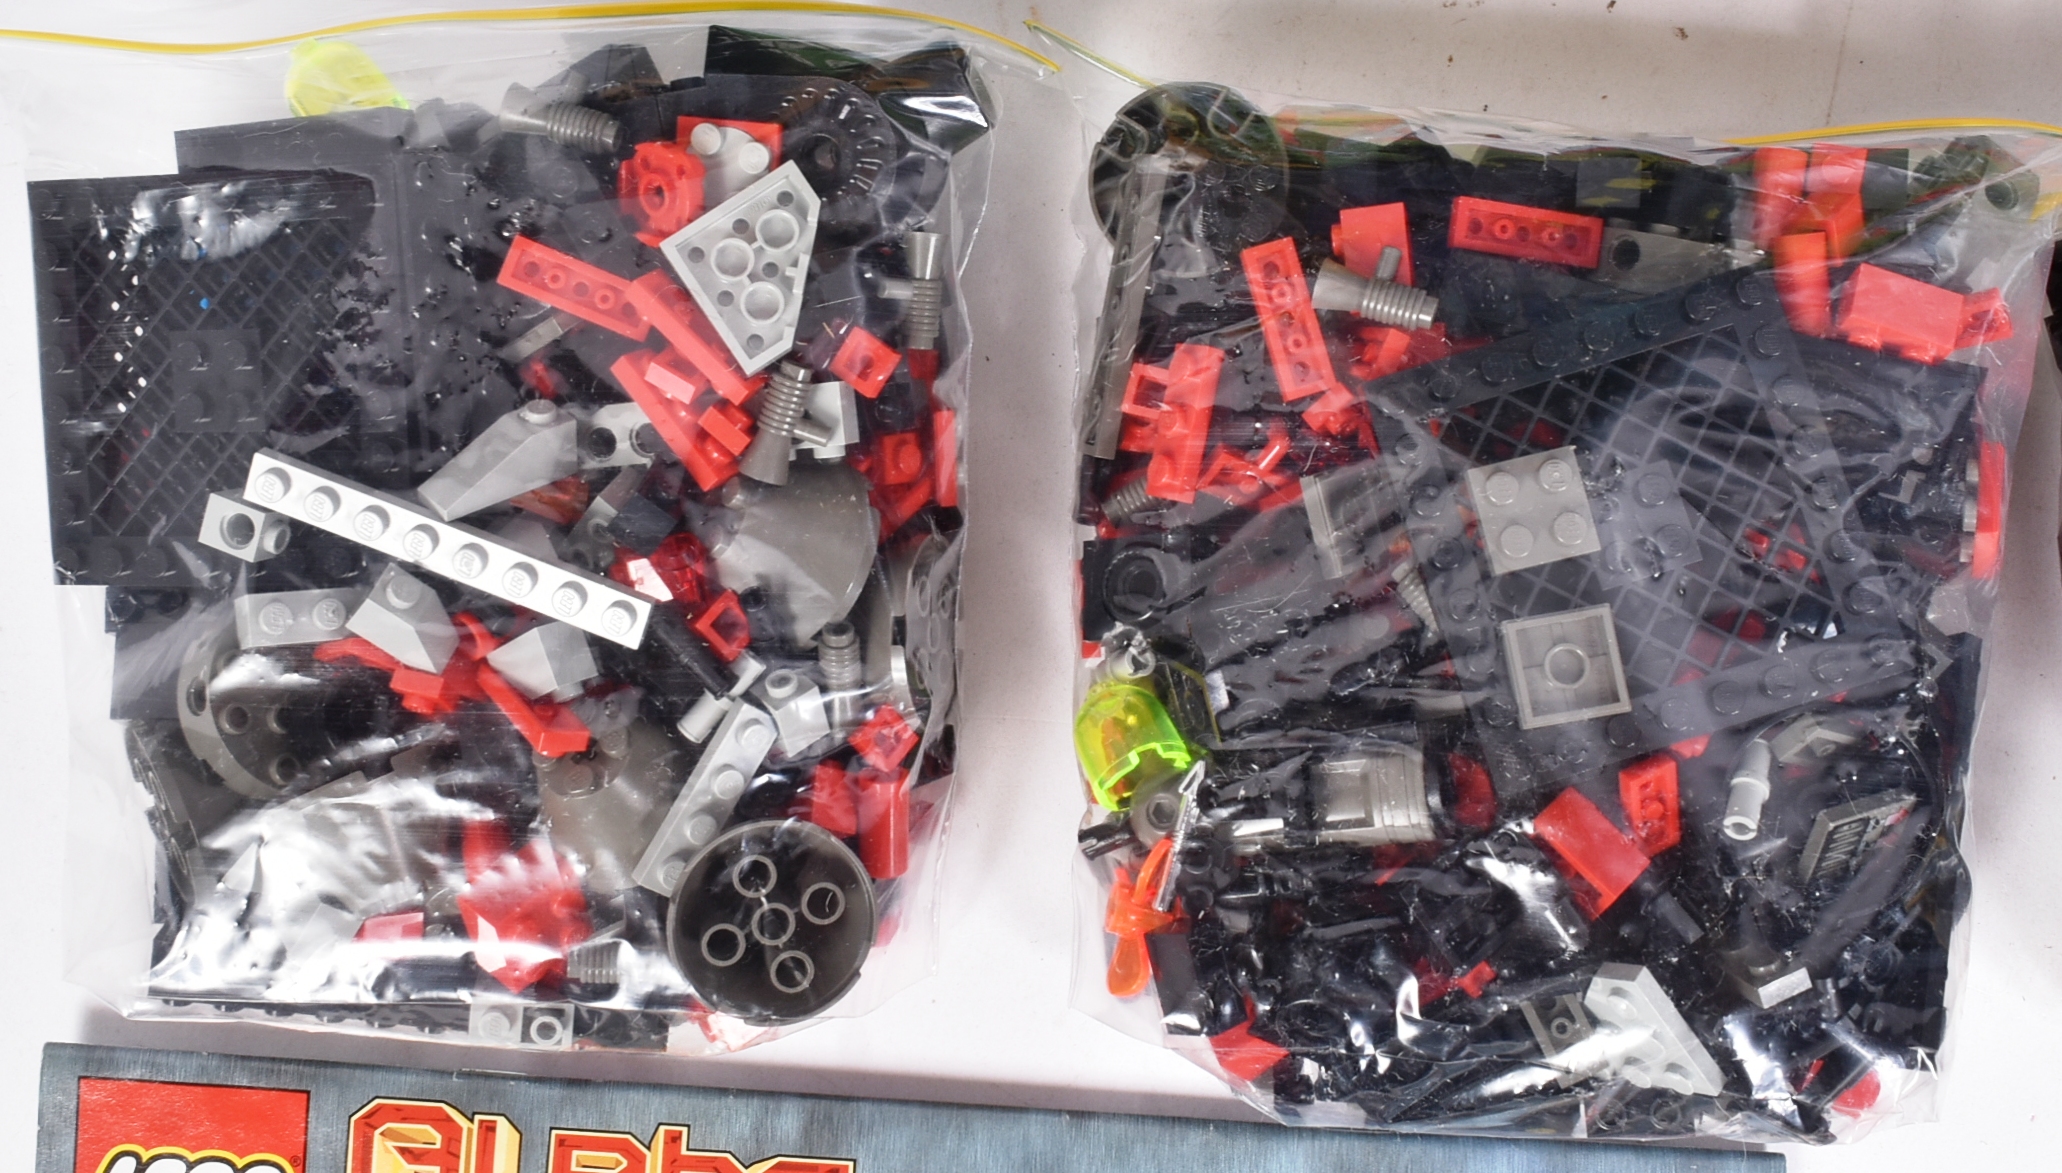 LEGO - COLLECTION OF LEGO AQUA TEAM SETS - Image 4 of 5